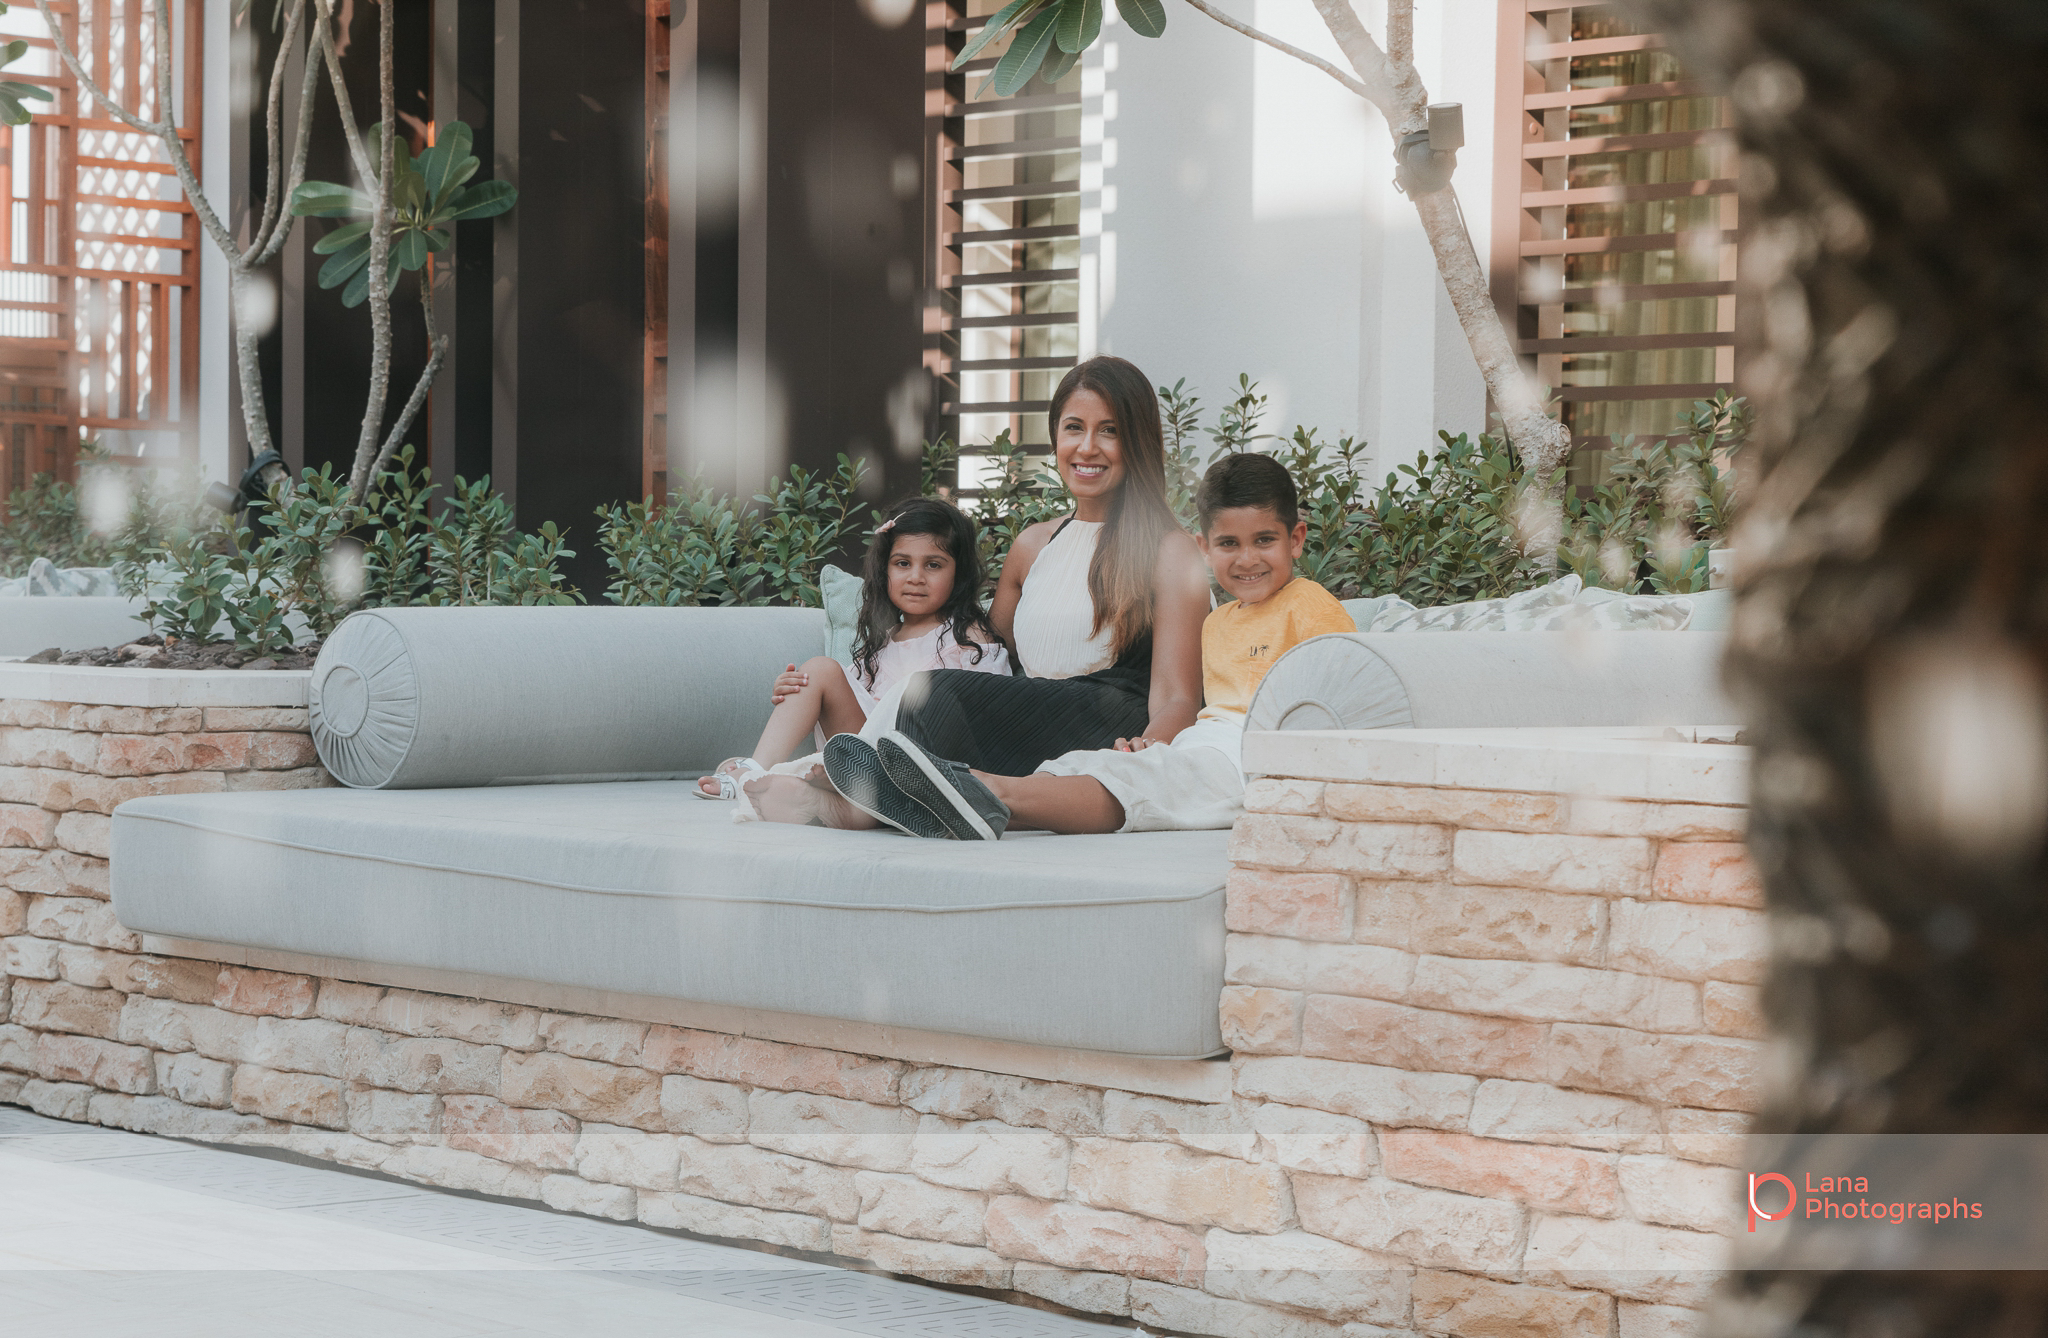  Lana Photographs Dubai Family Photography beach photoshoot family shot on the couch 